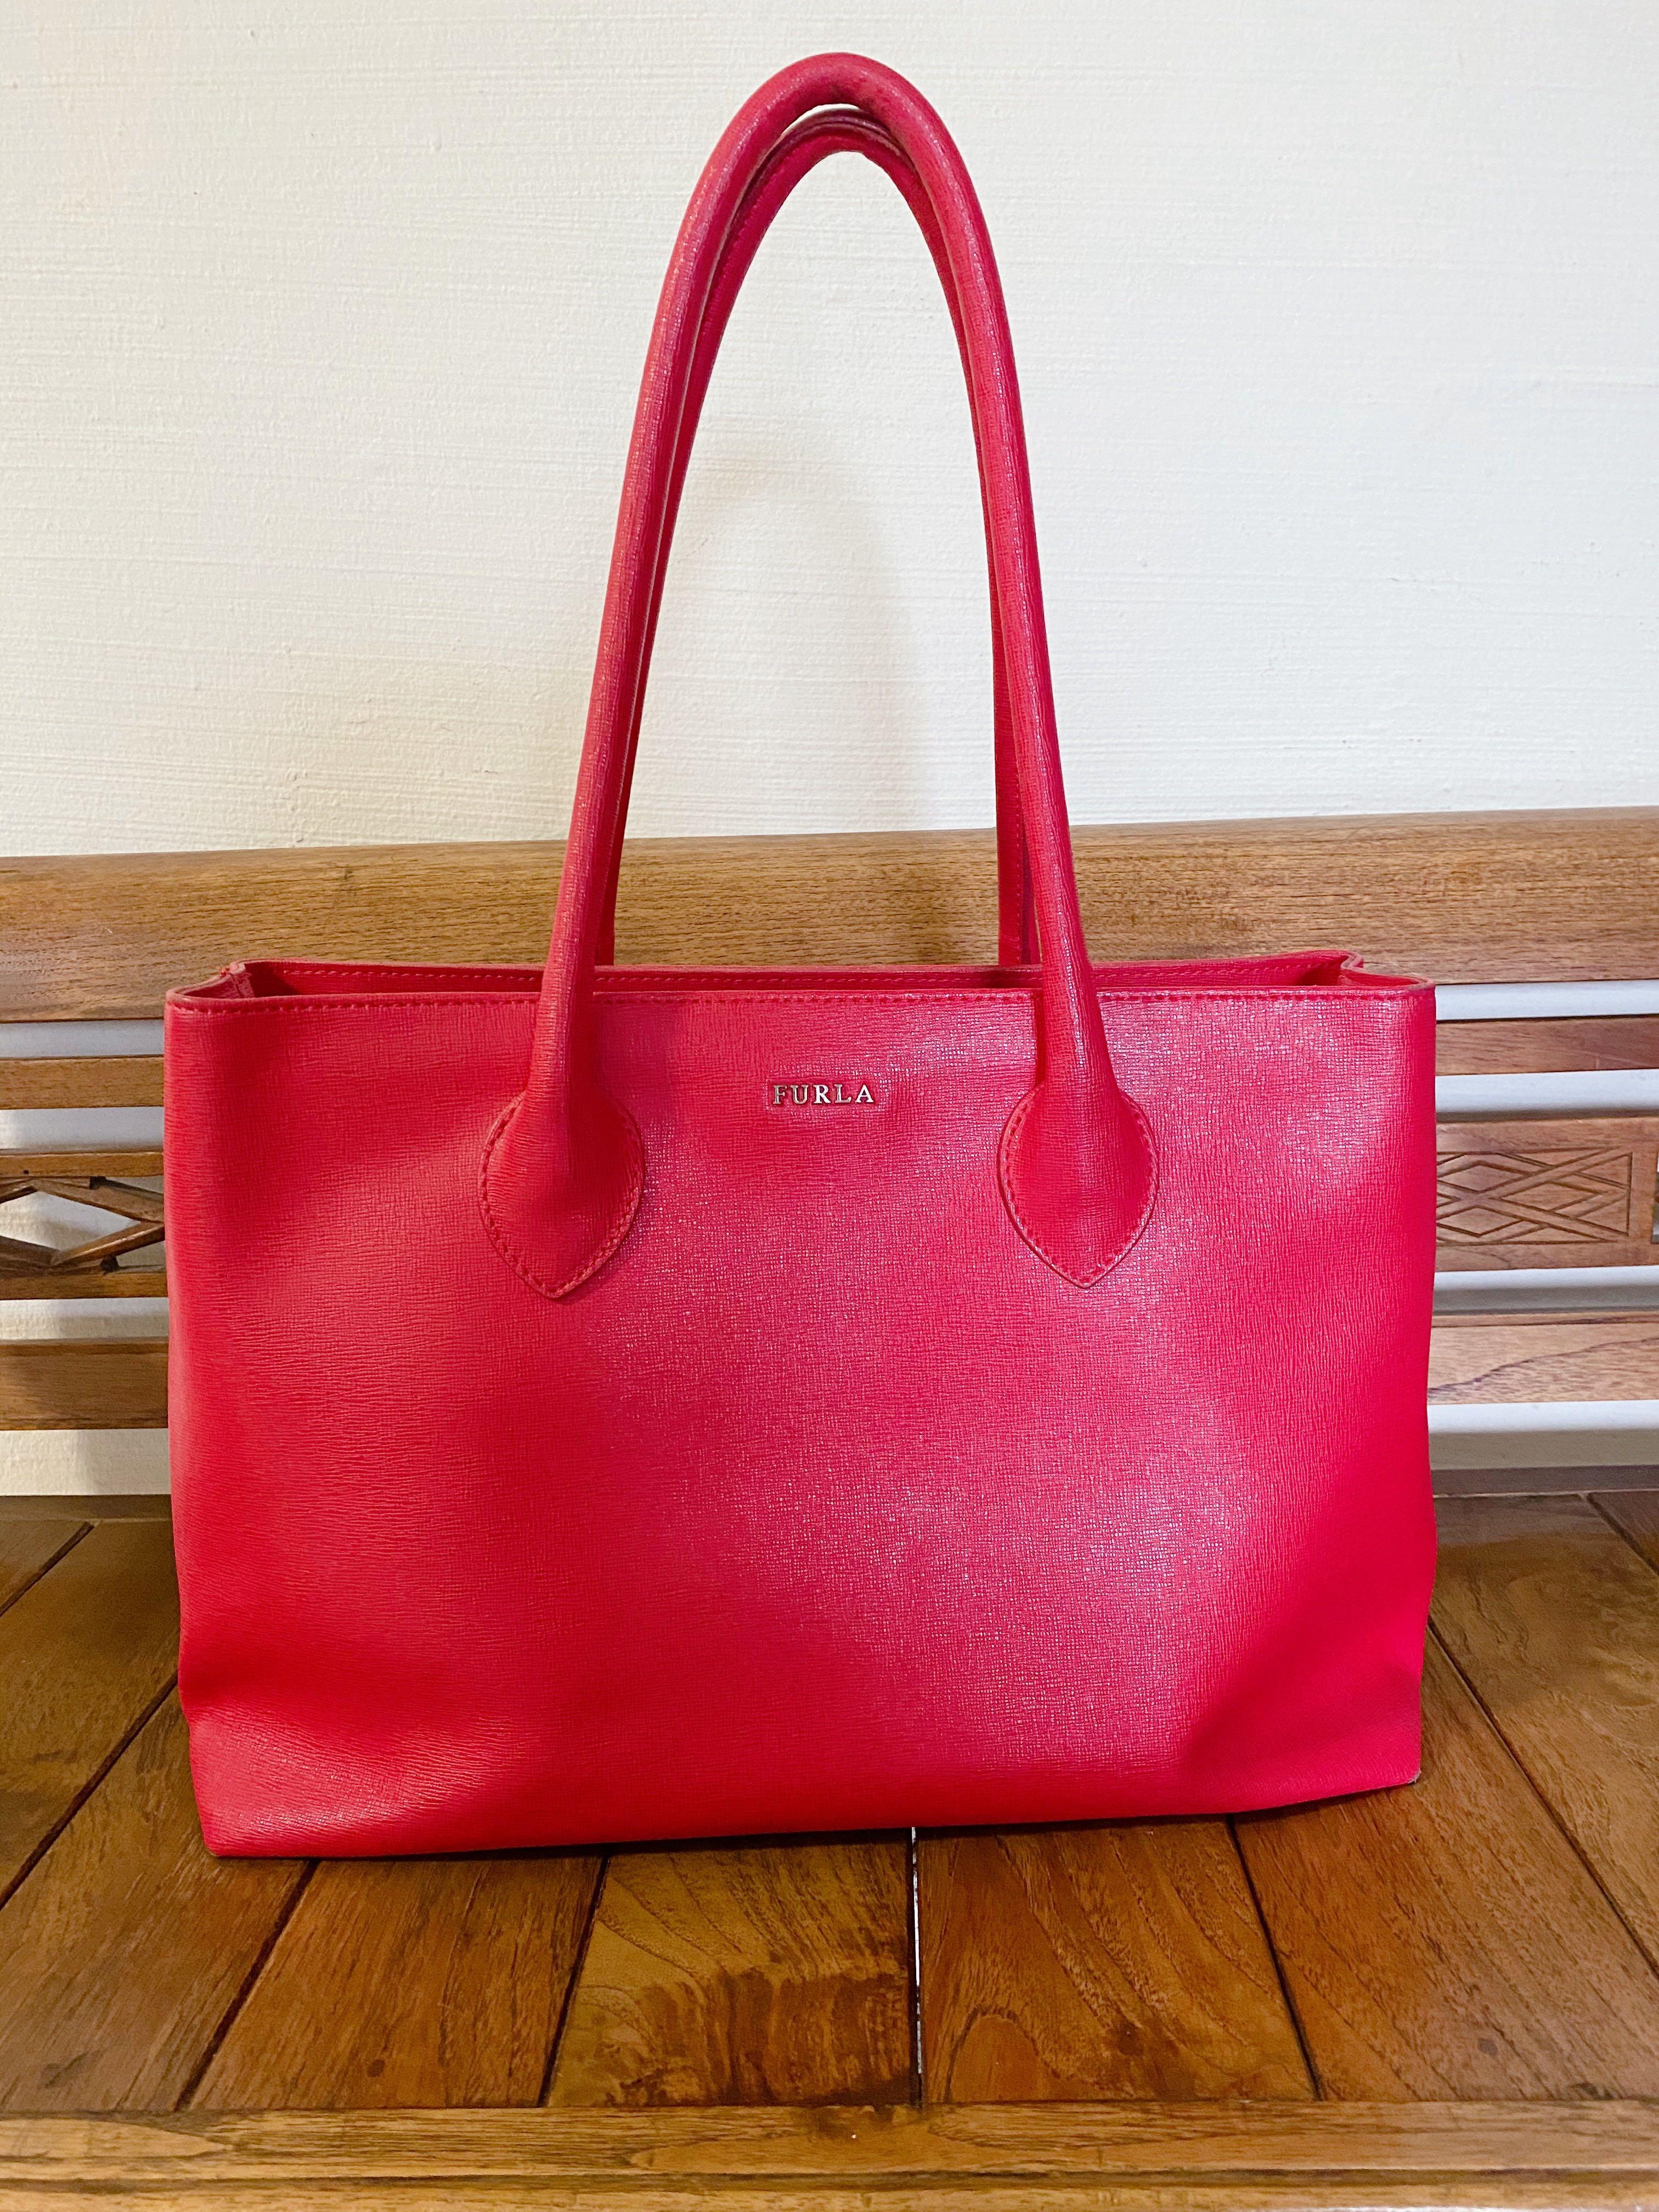 Buy FURLA Piper Xl Women's Handbag (Lampone) at Amazon.in